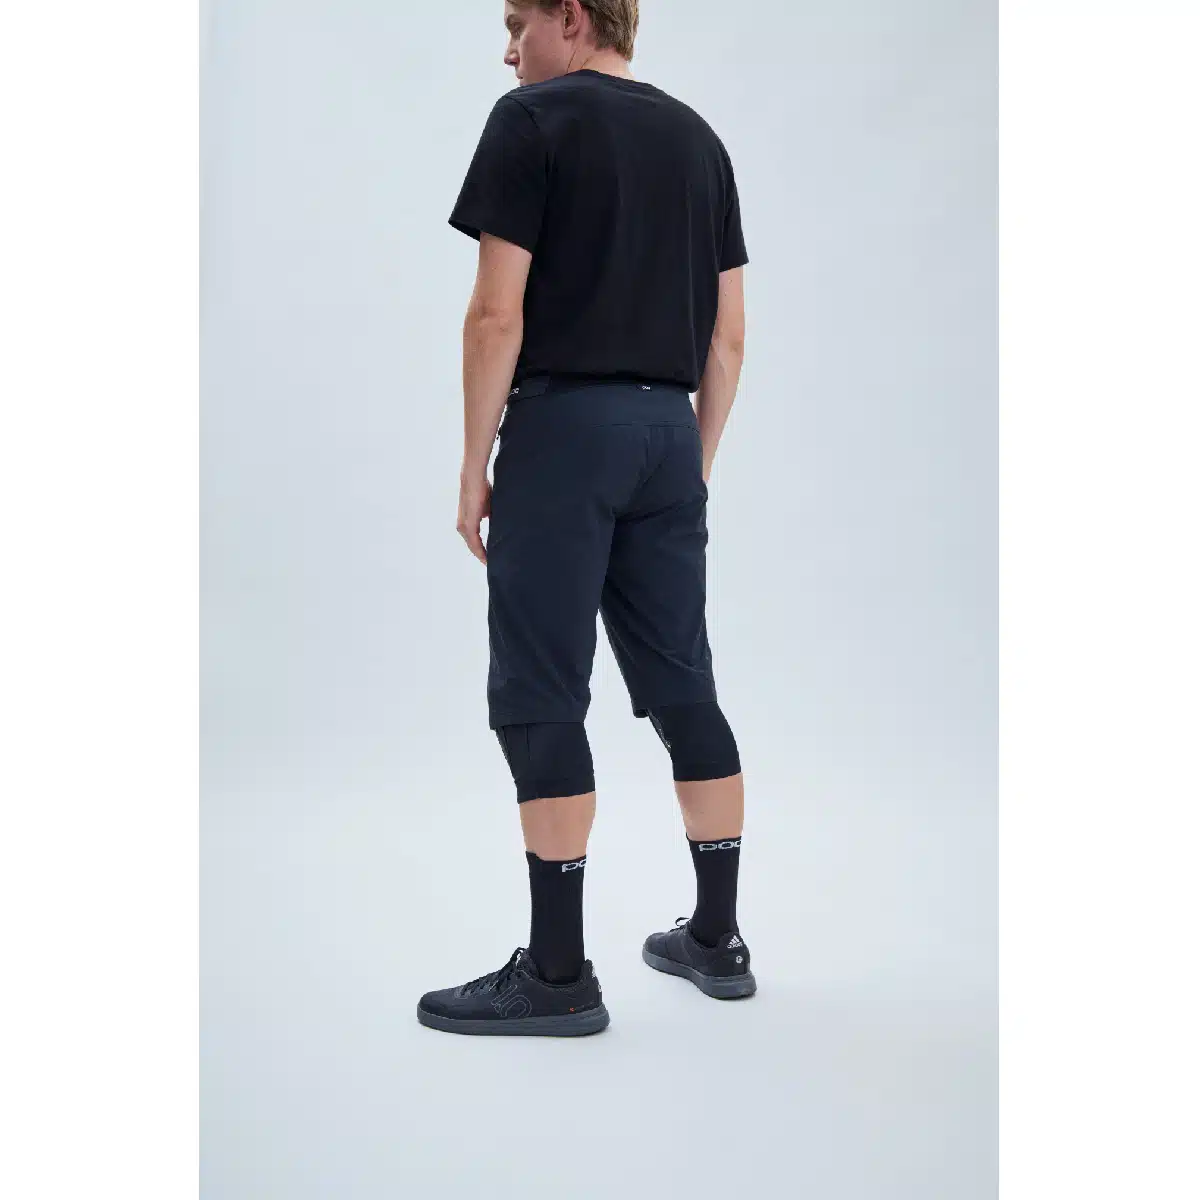 POC Essential Enduro Shorts rear